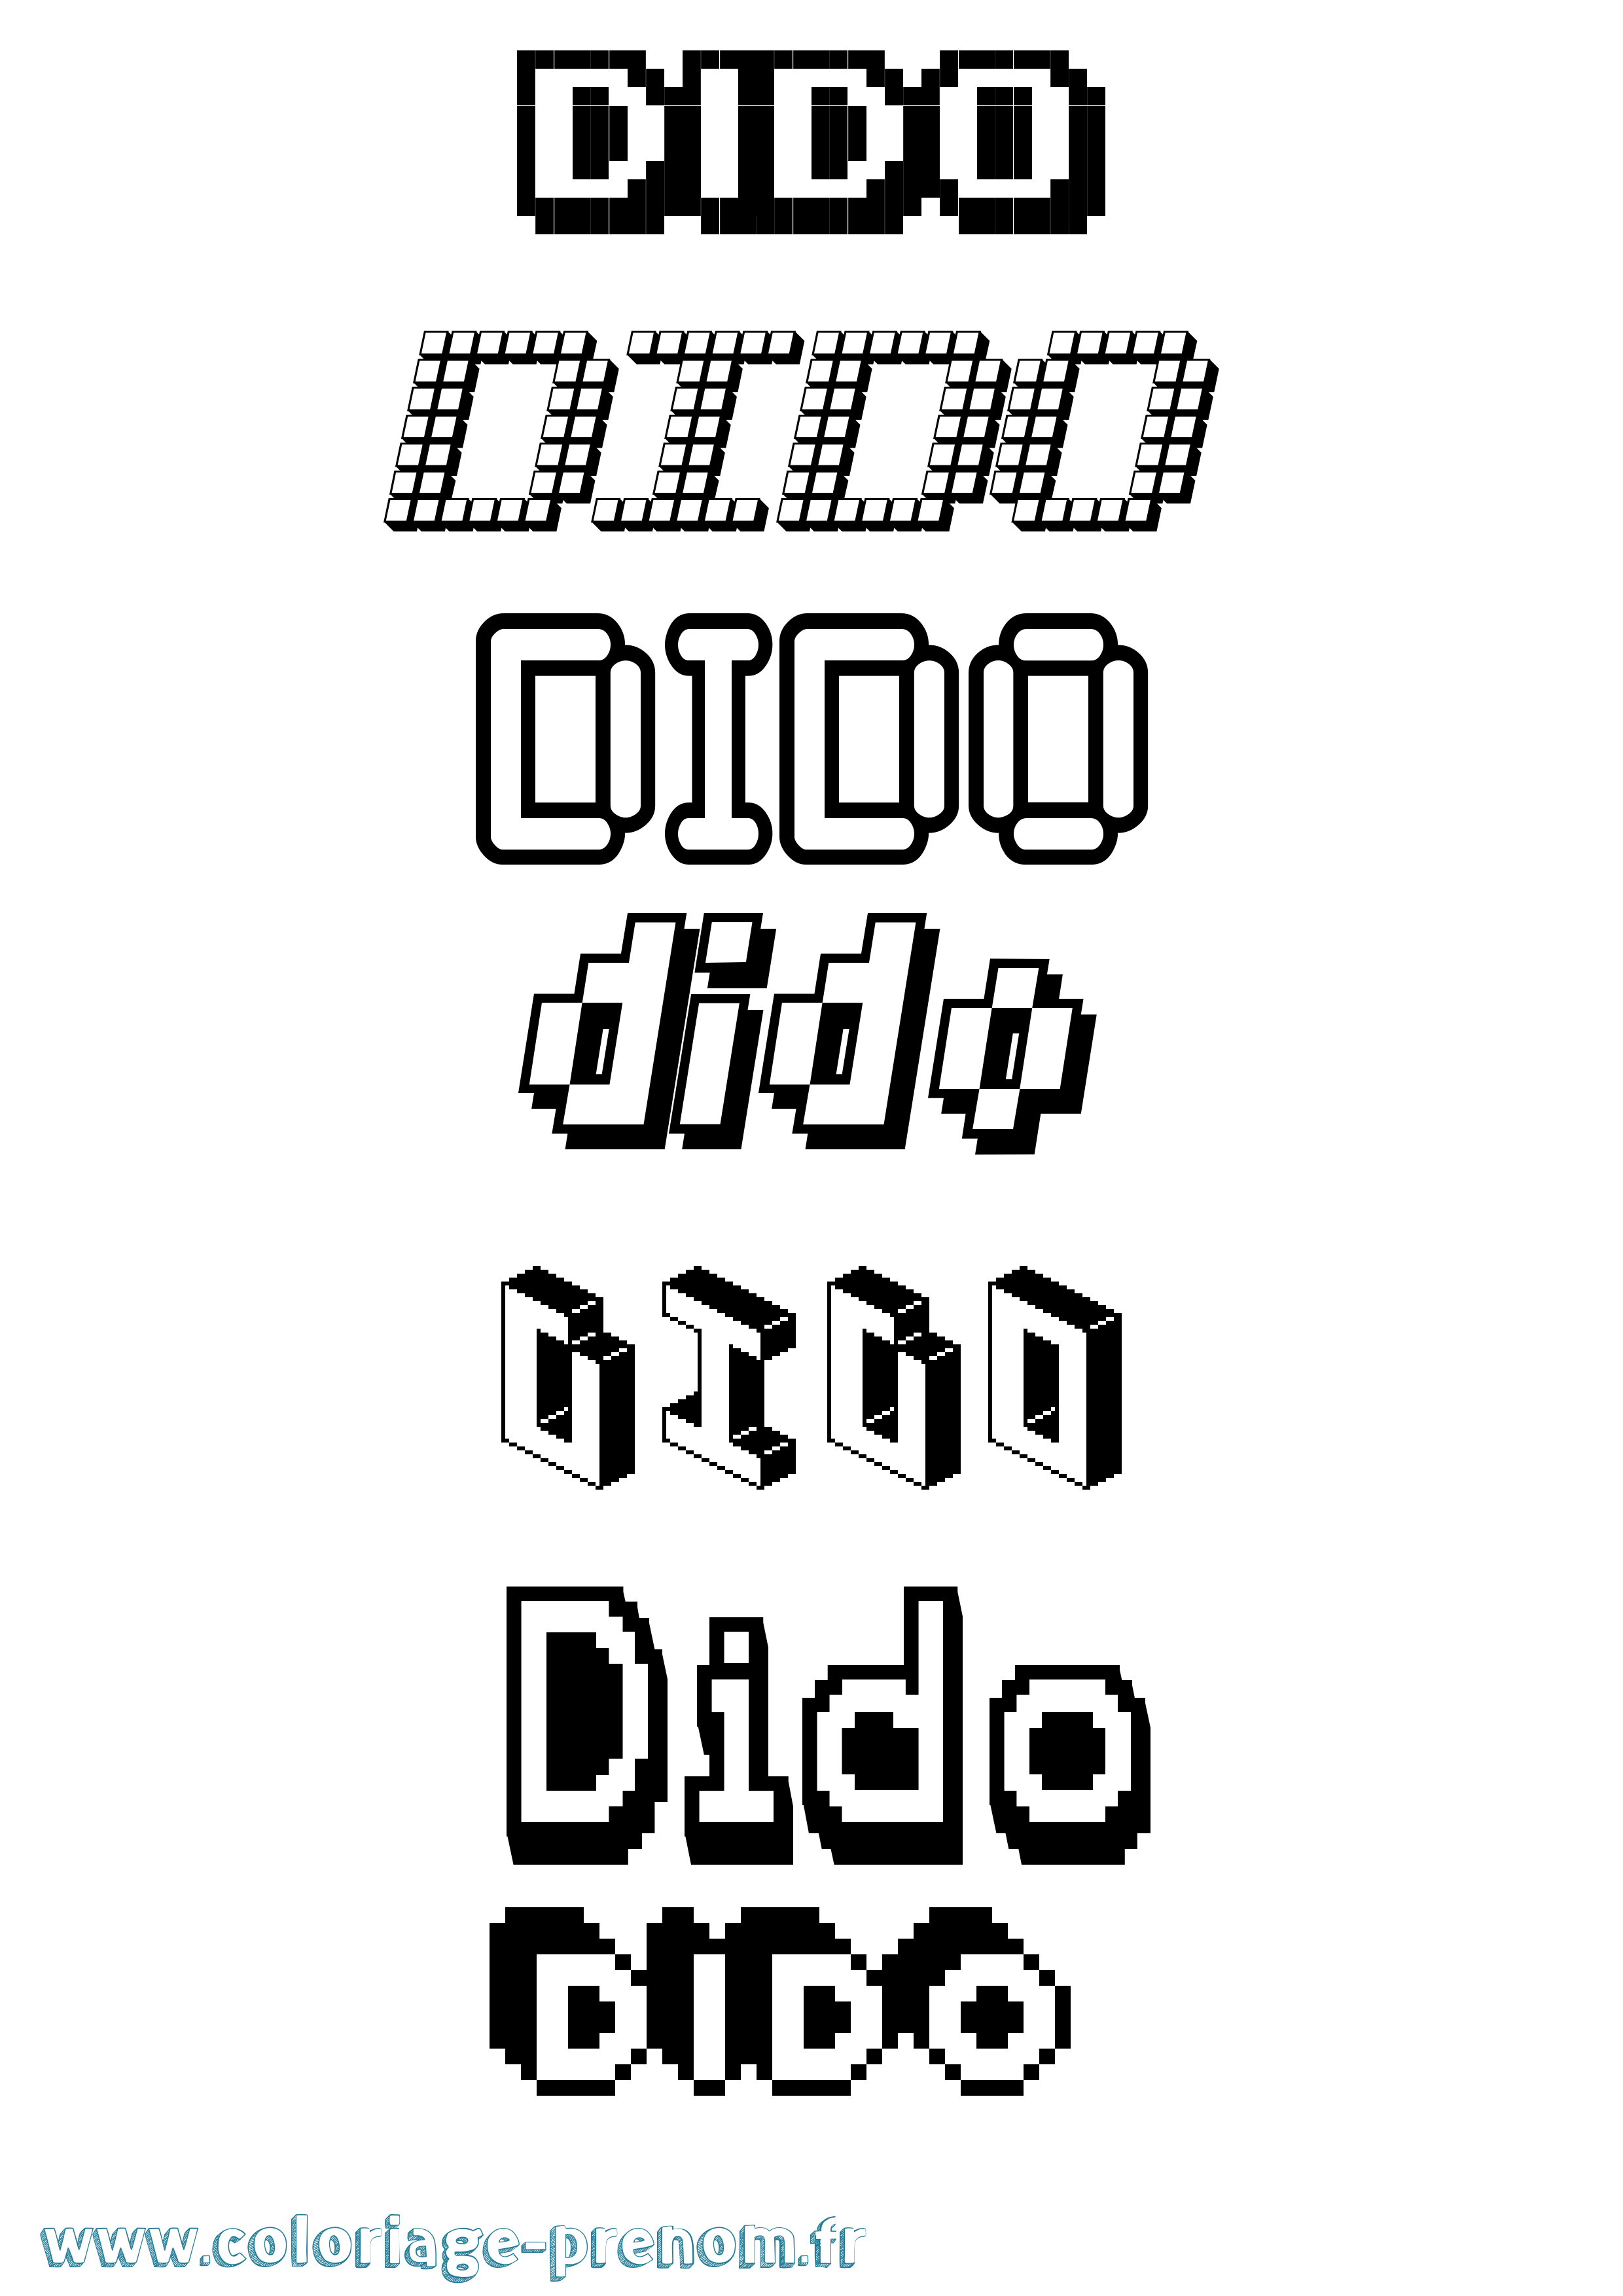 Coloriage prénom Dido Pixel